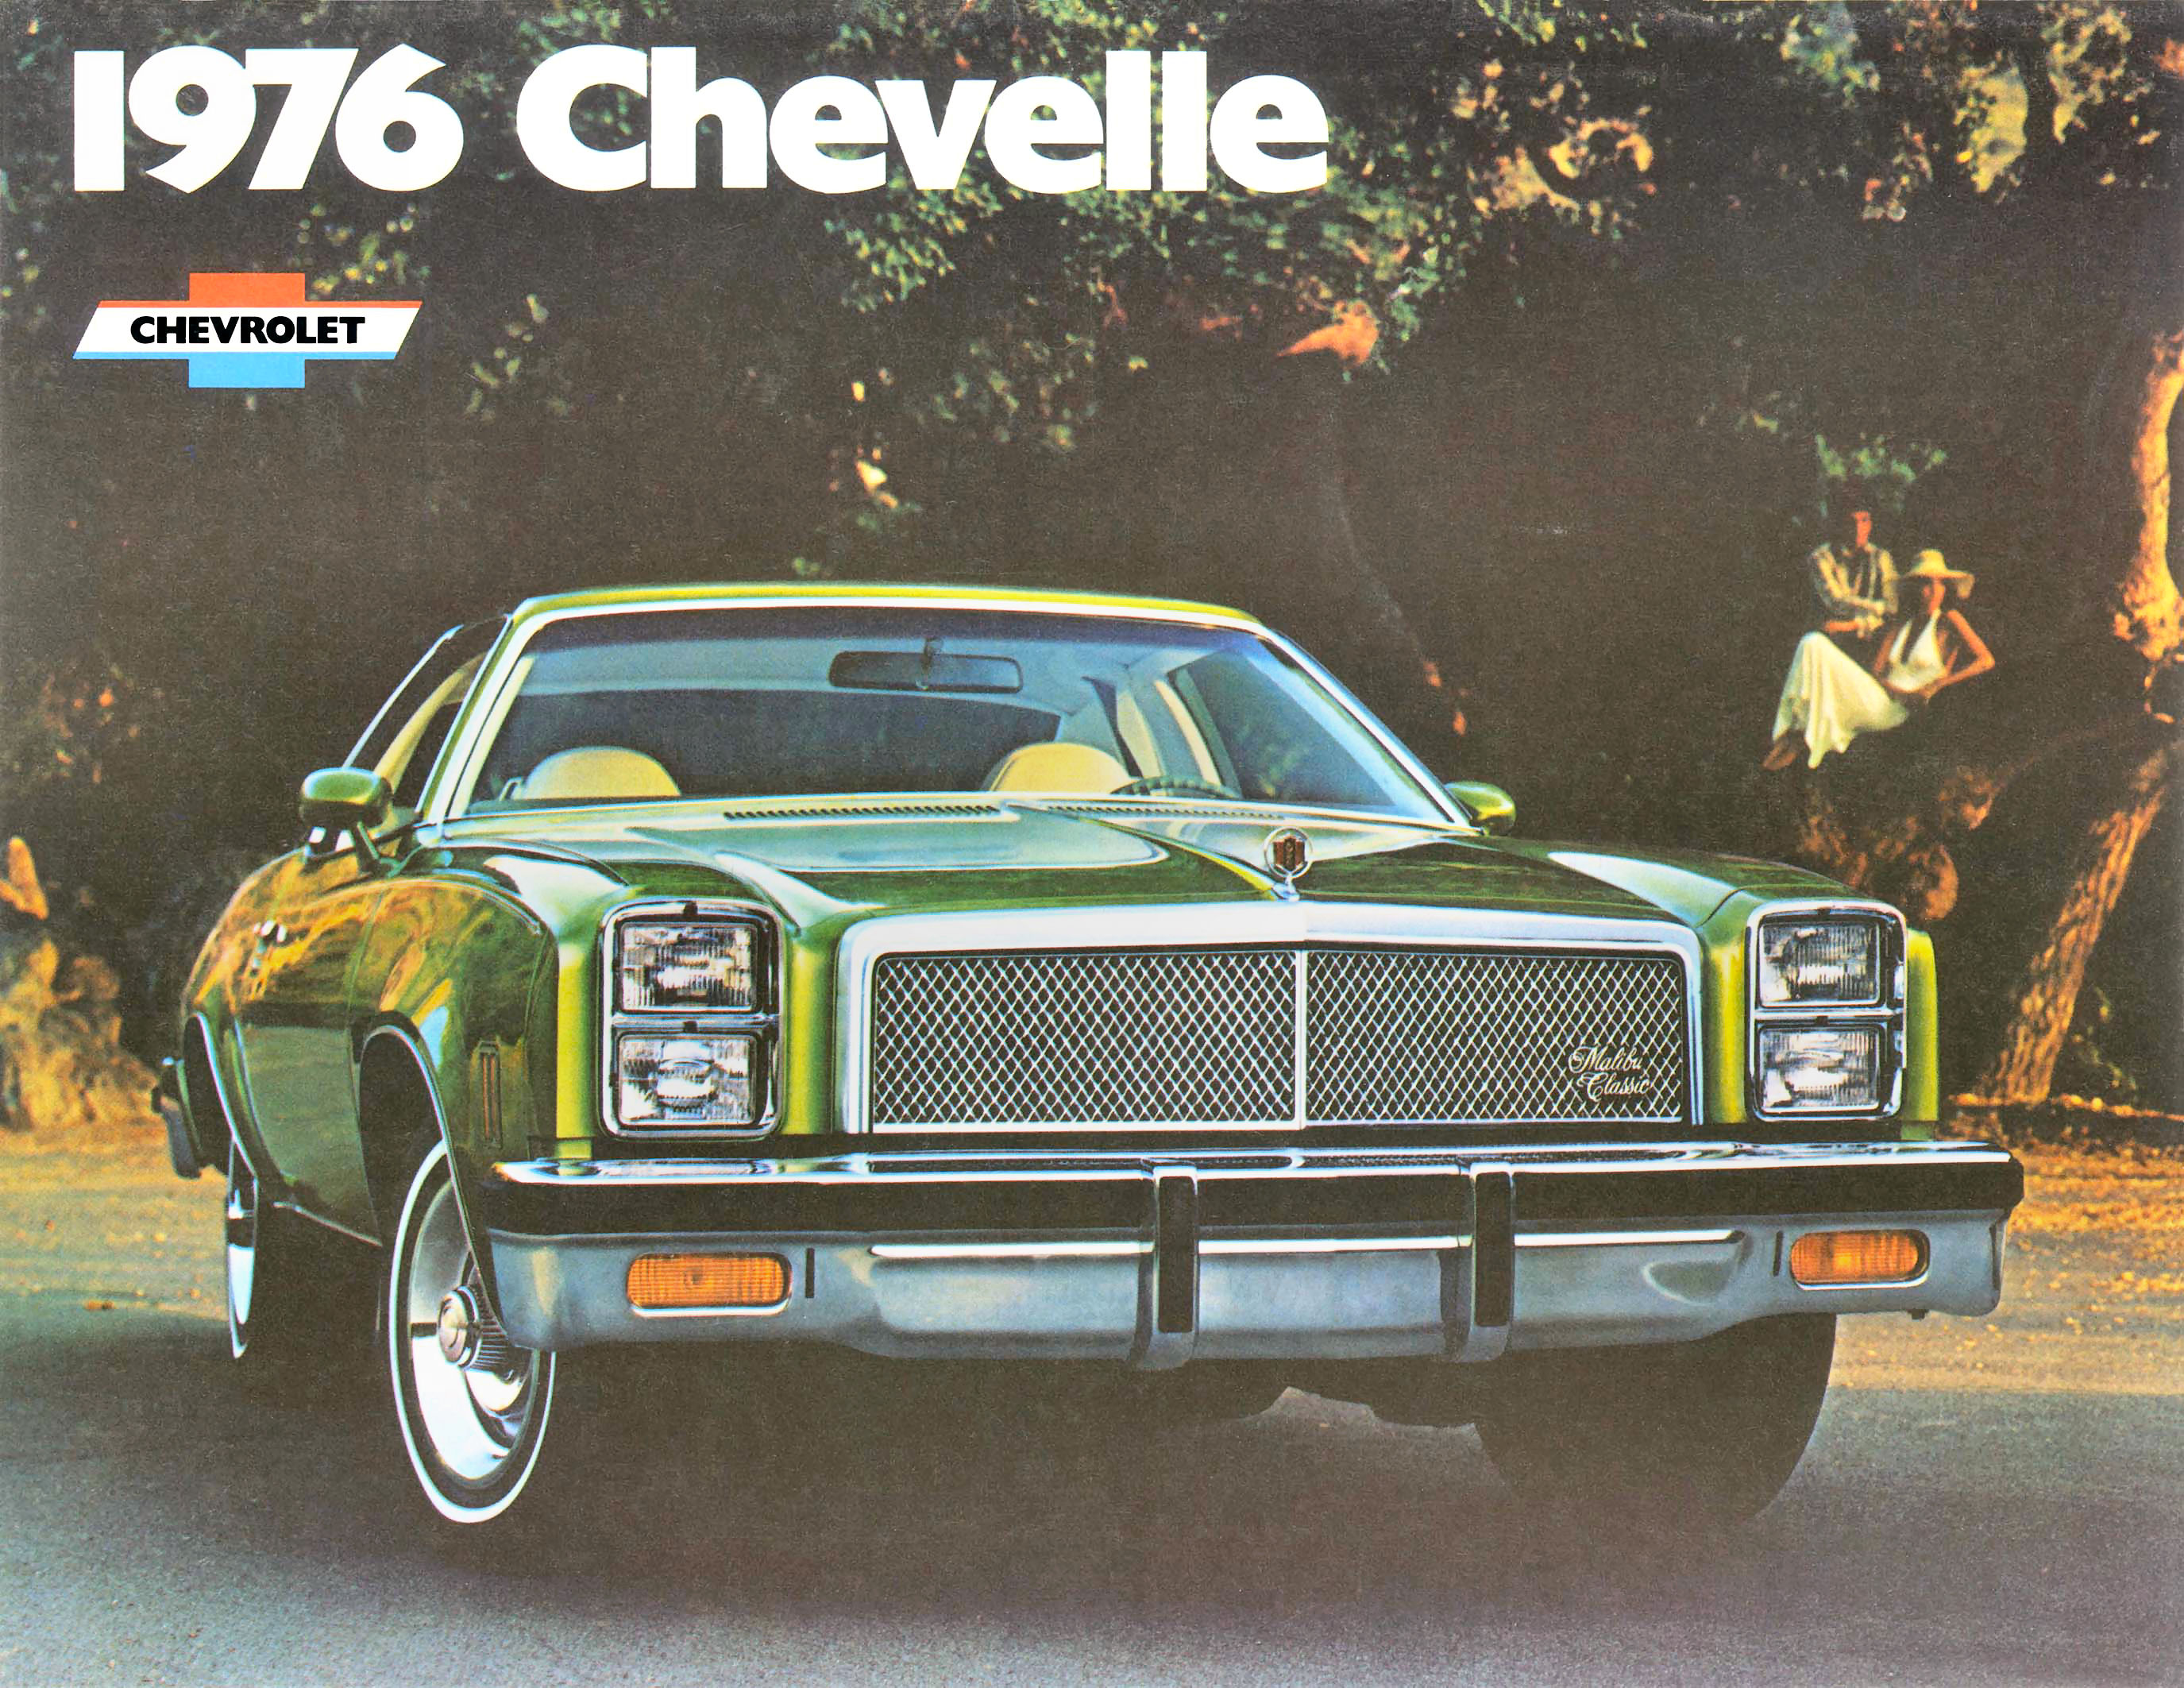 1976_Chevrolet_Chevelle-01